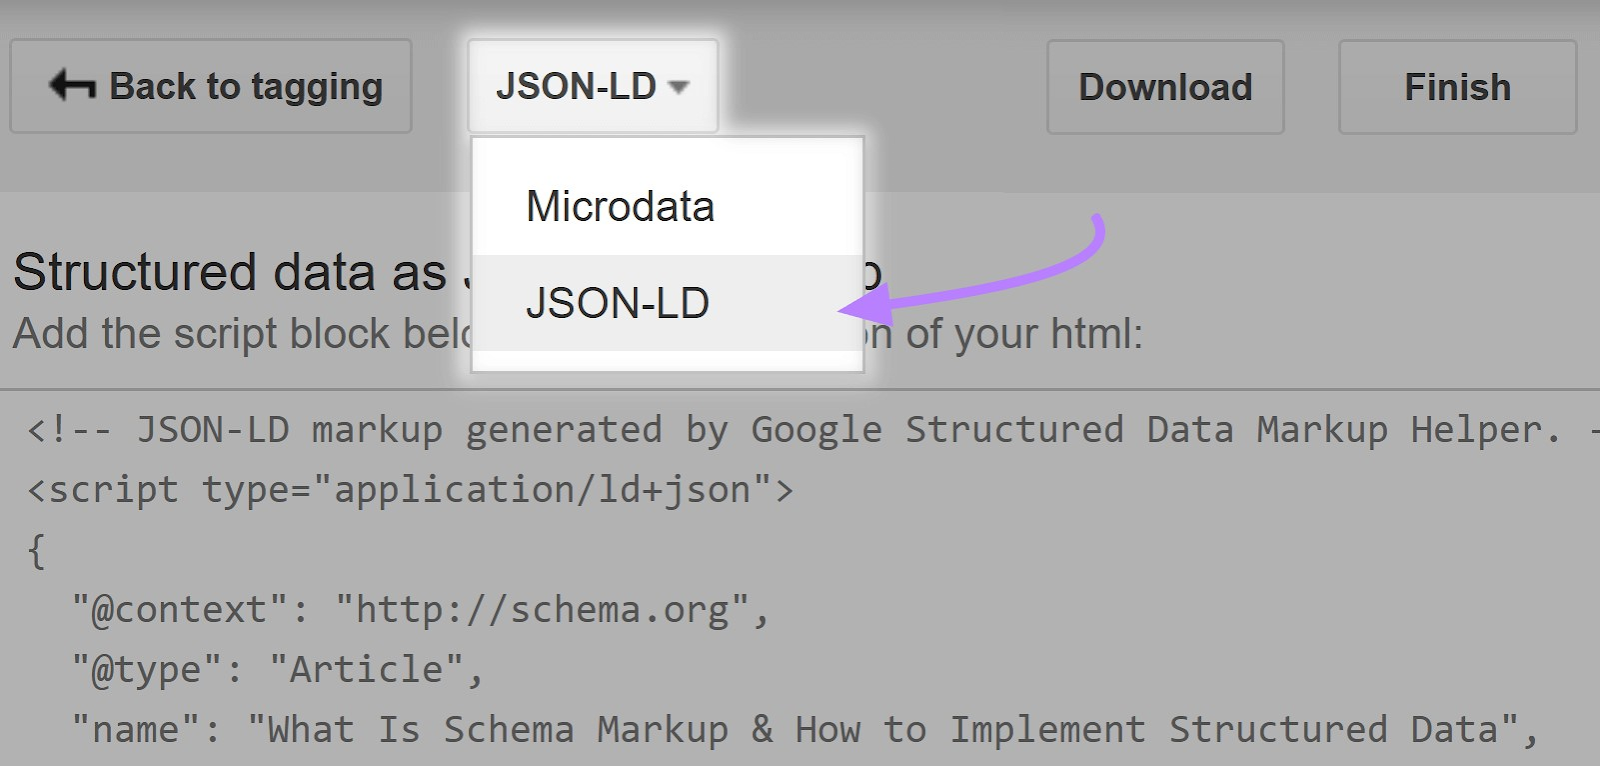 drop-down menu showing "JSON-LD" and "Microdata" options